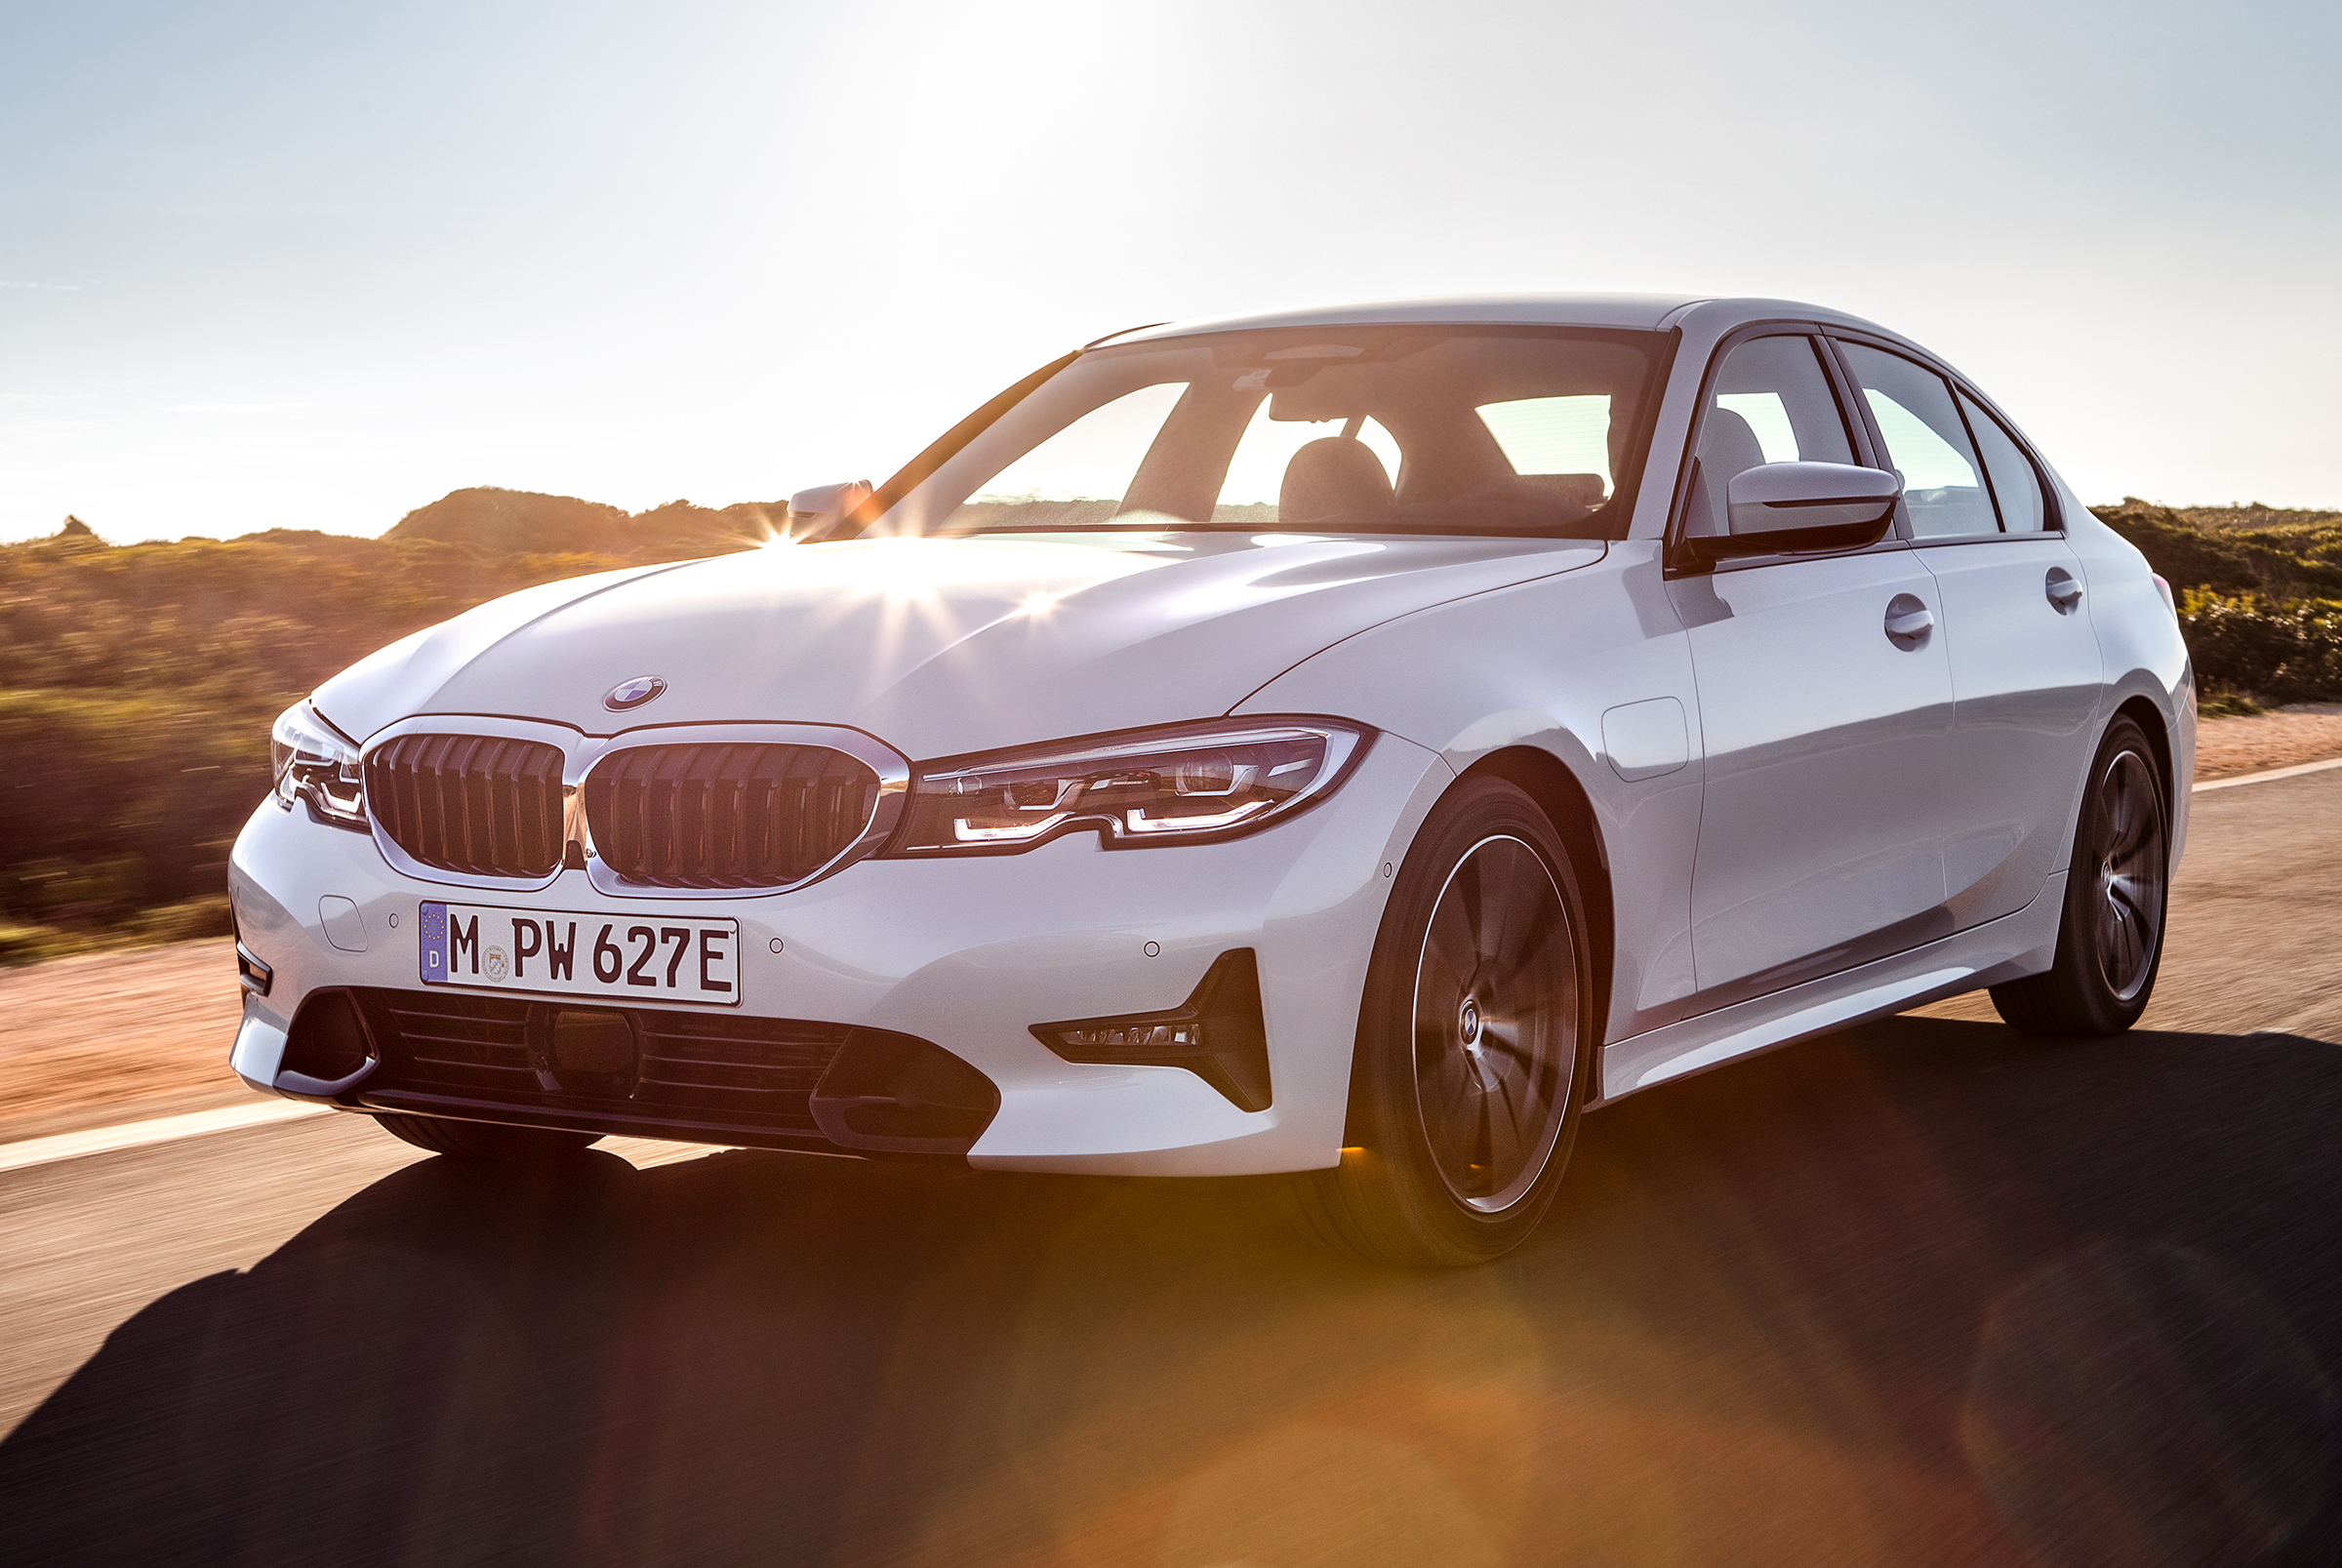 kraan Redenaar Doe het niet 2019 BMW 3 Series 330e plug-in hybrid: specs, price and on-sale date |  Carbuyer